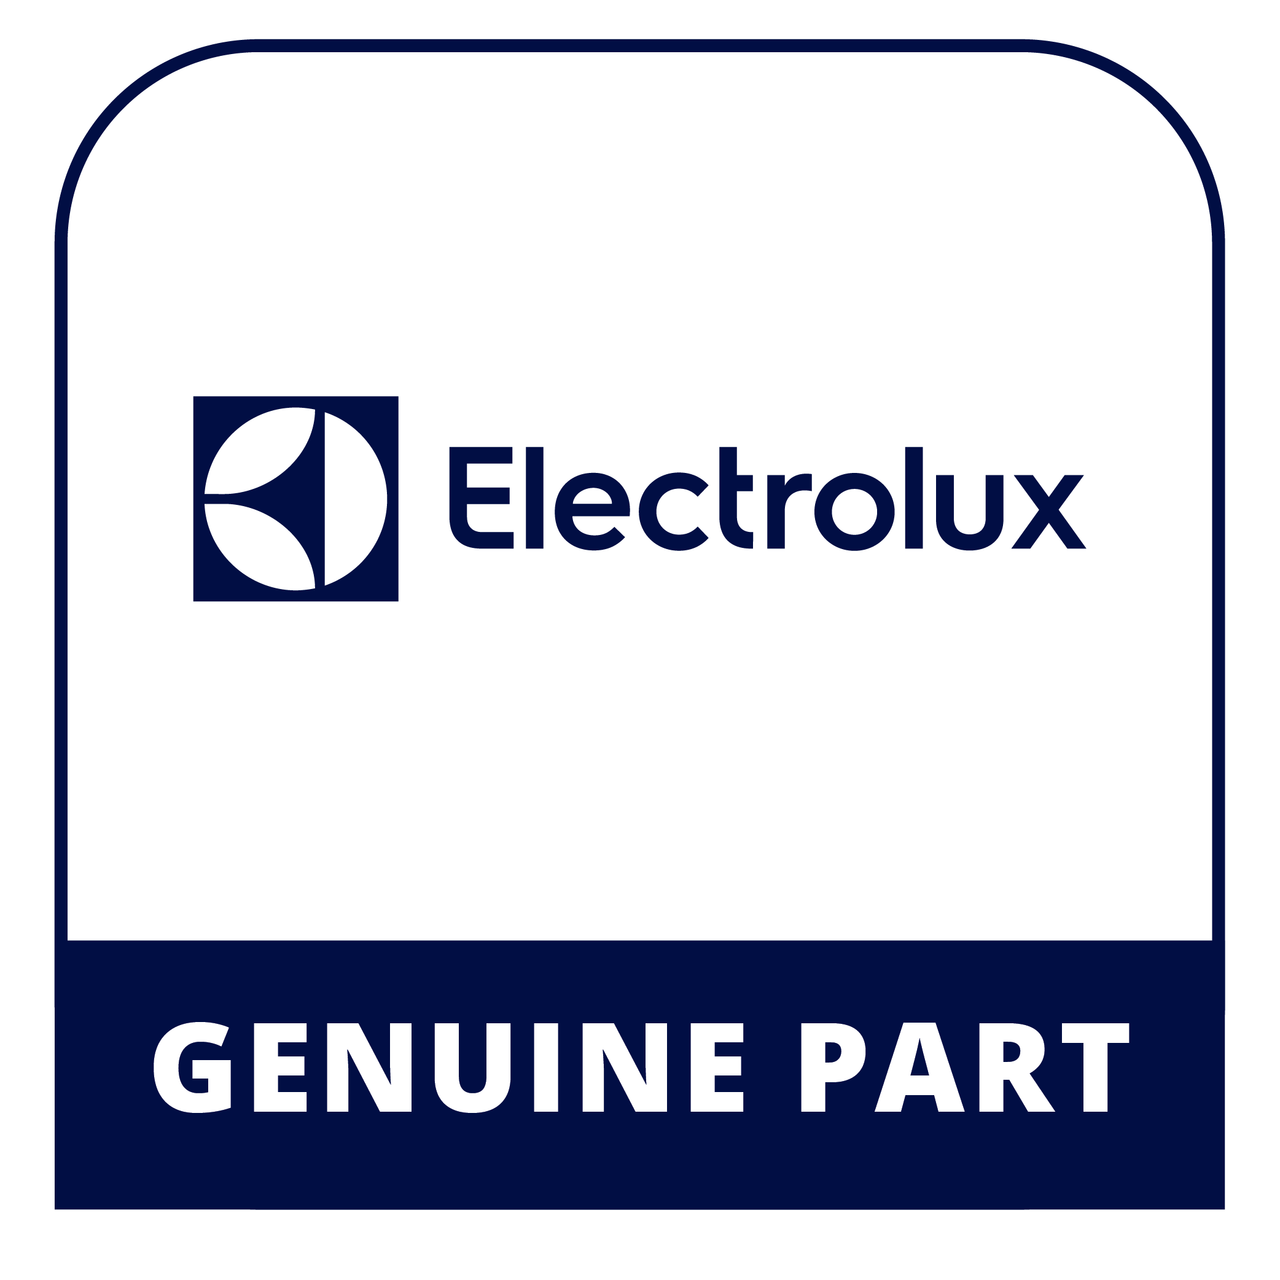 Frigidaire - Electrolux 240326304 Cover - Genuine Electrolux Part